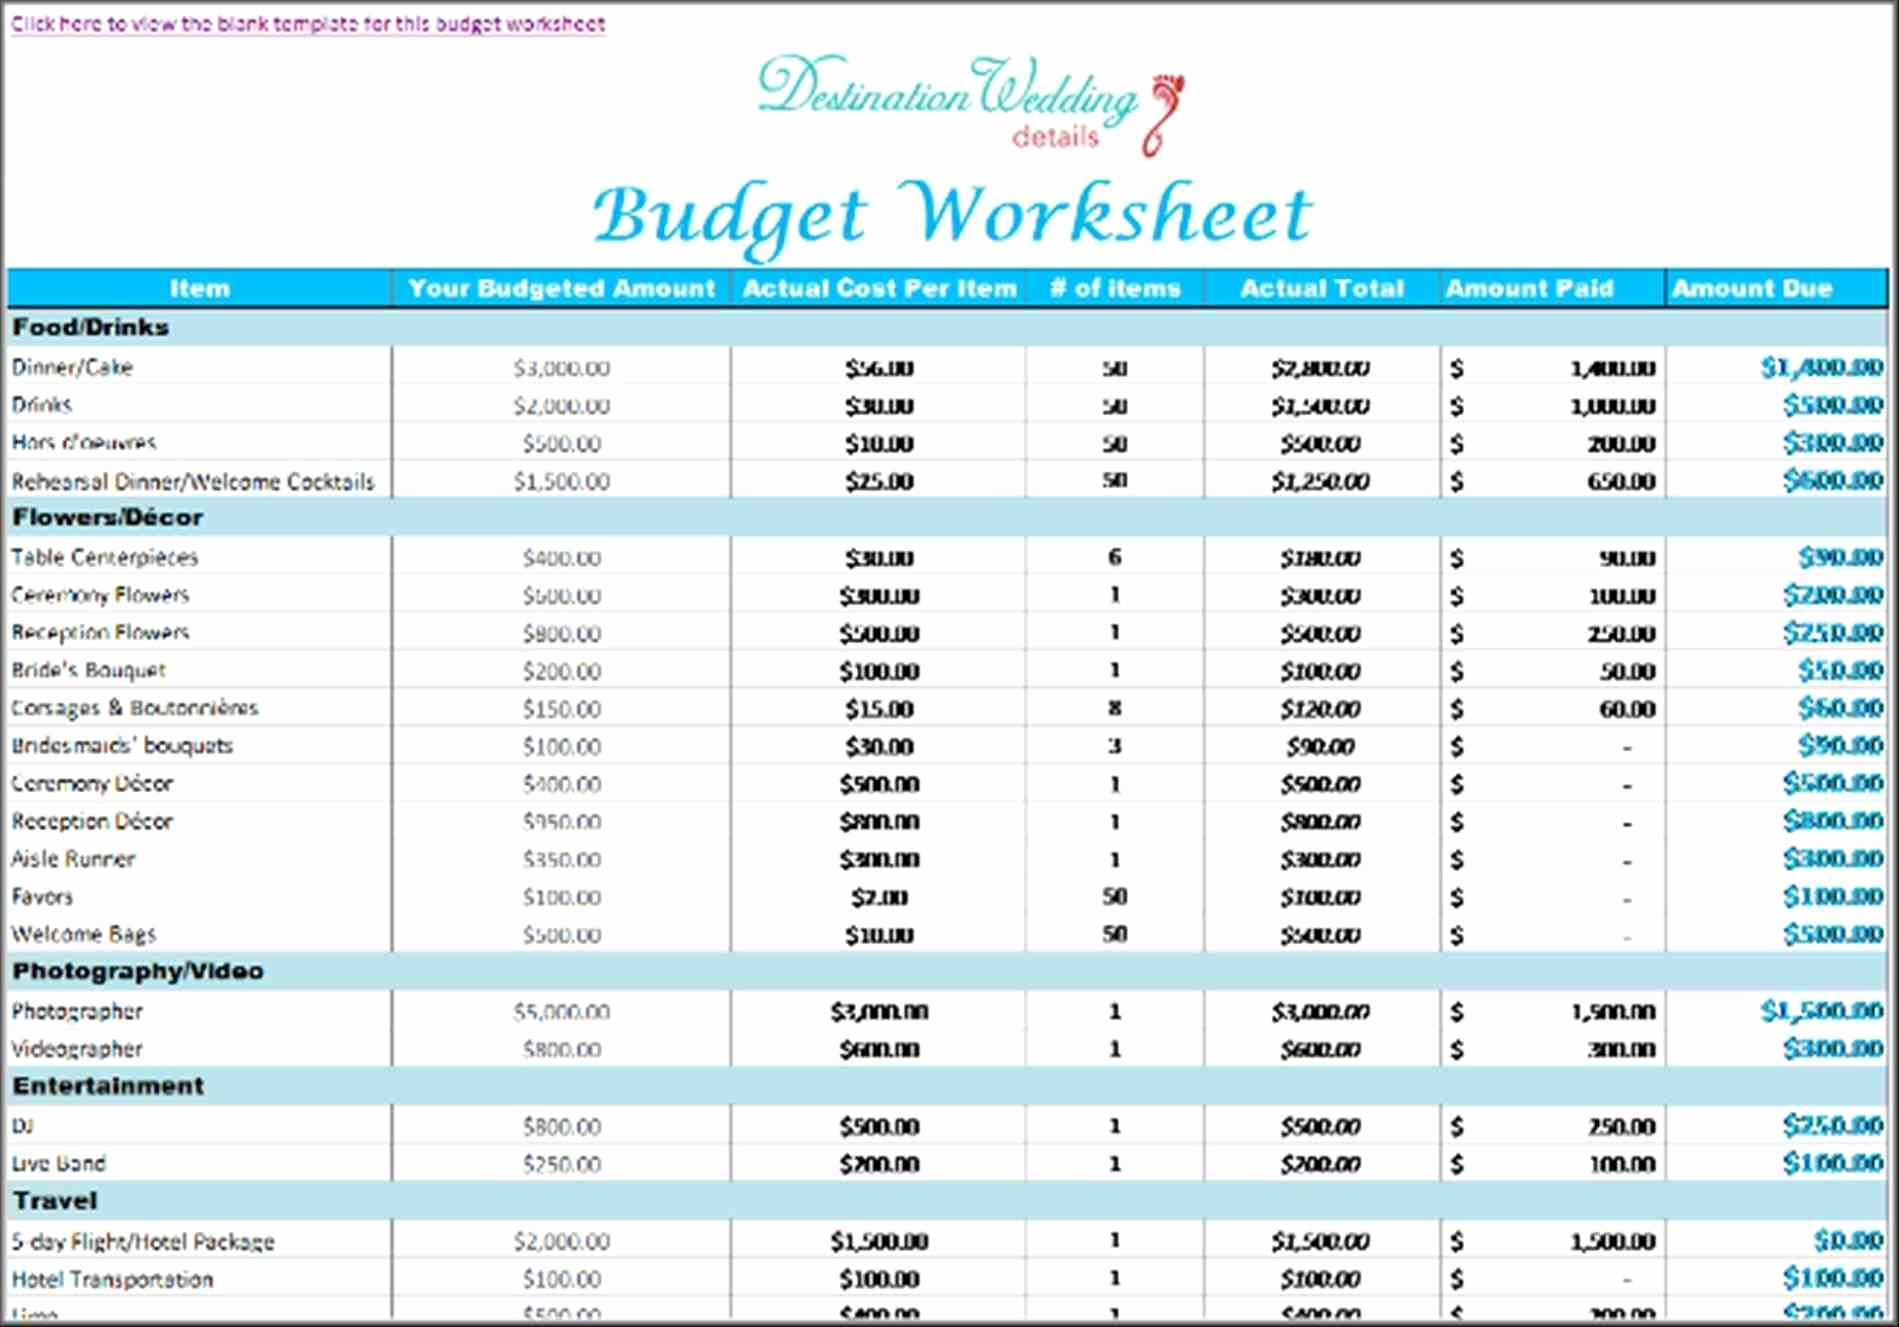 Bridal Budget Spreadsheet regarding Wedding Expense Spreadsheet Budget The Knot Google Nz Template